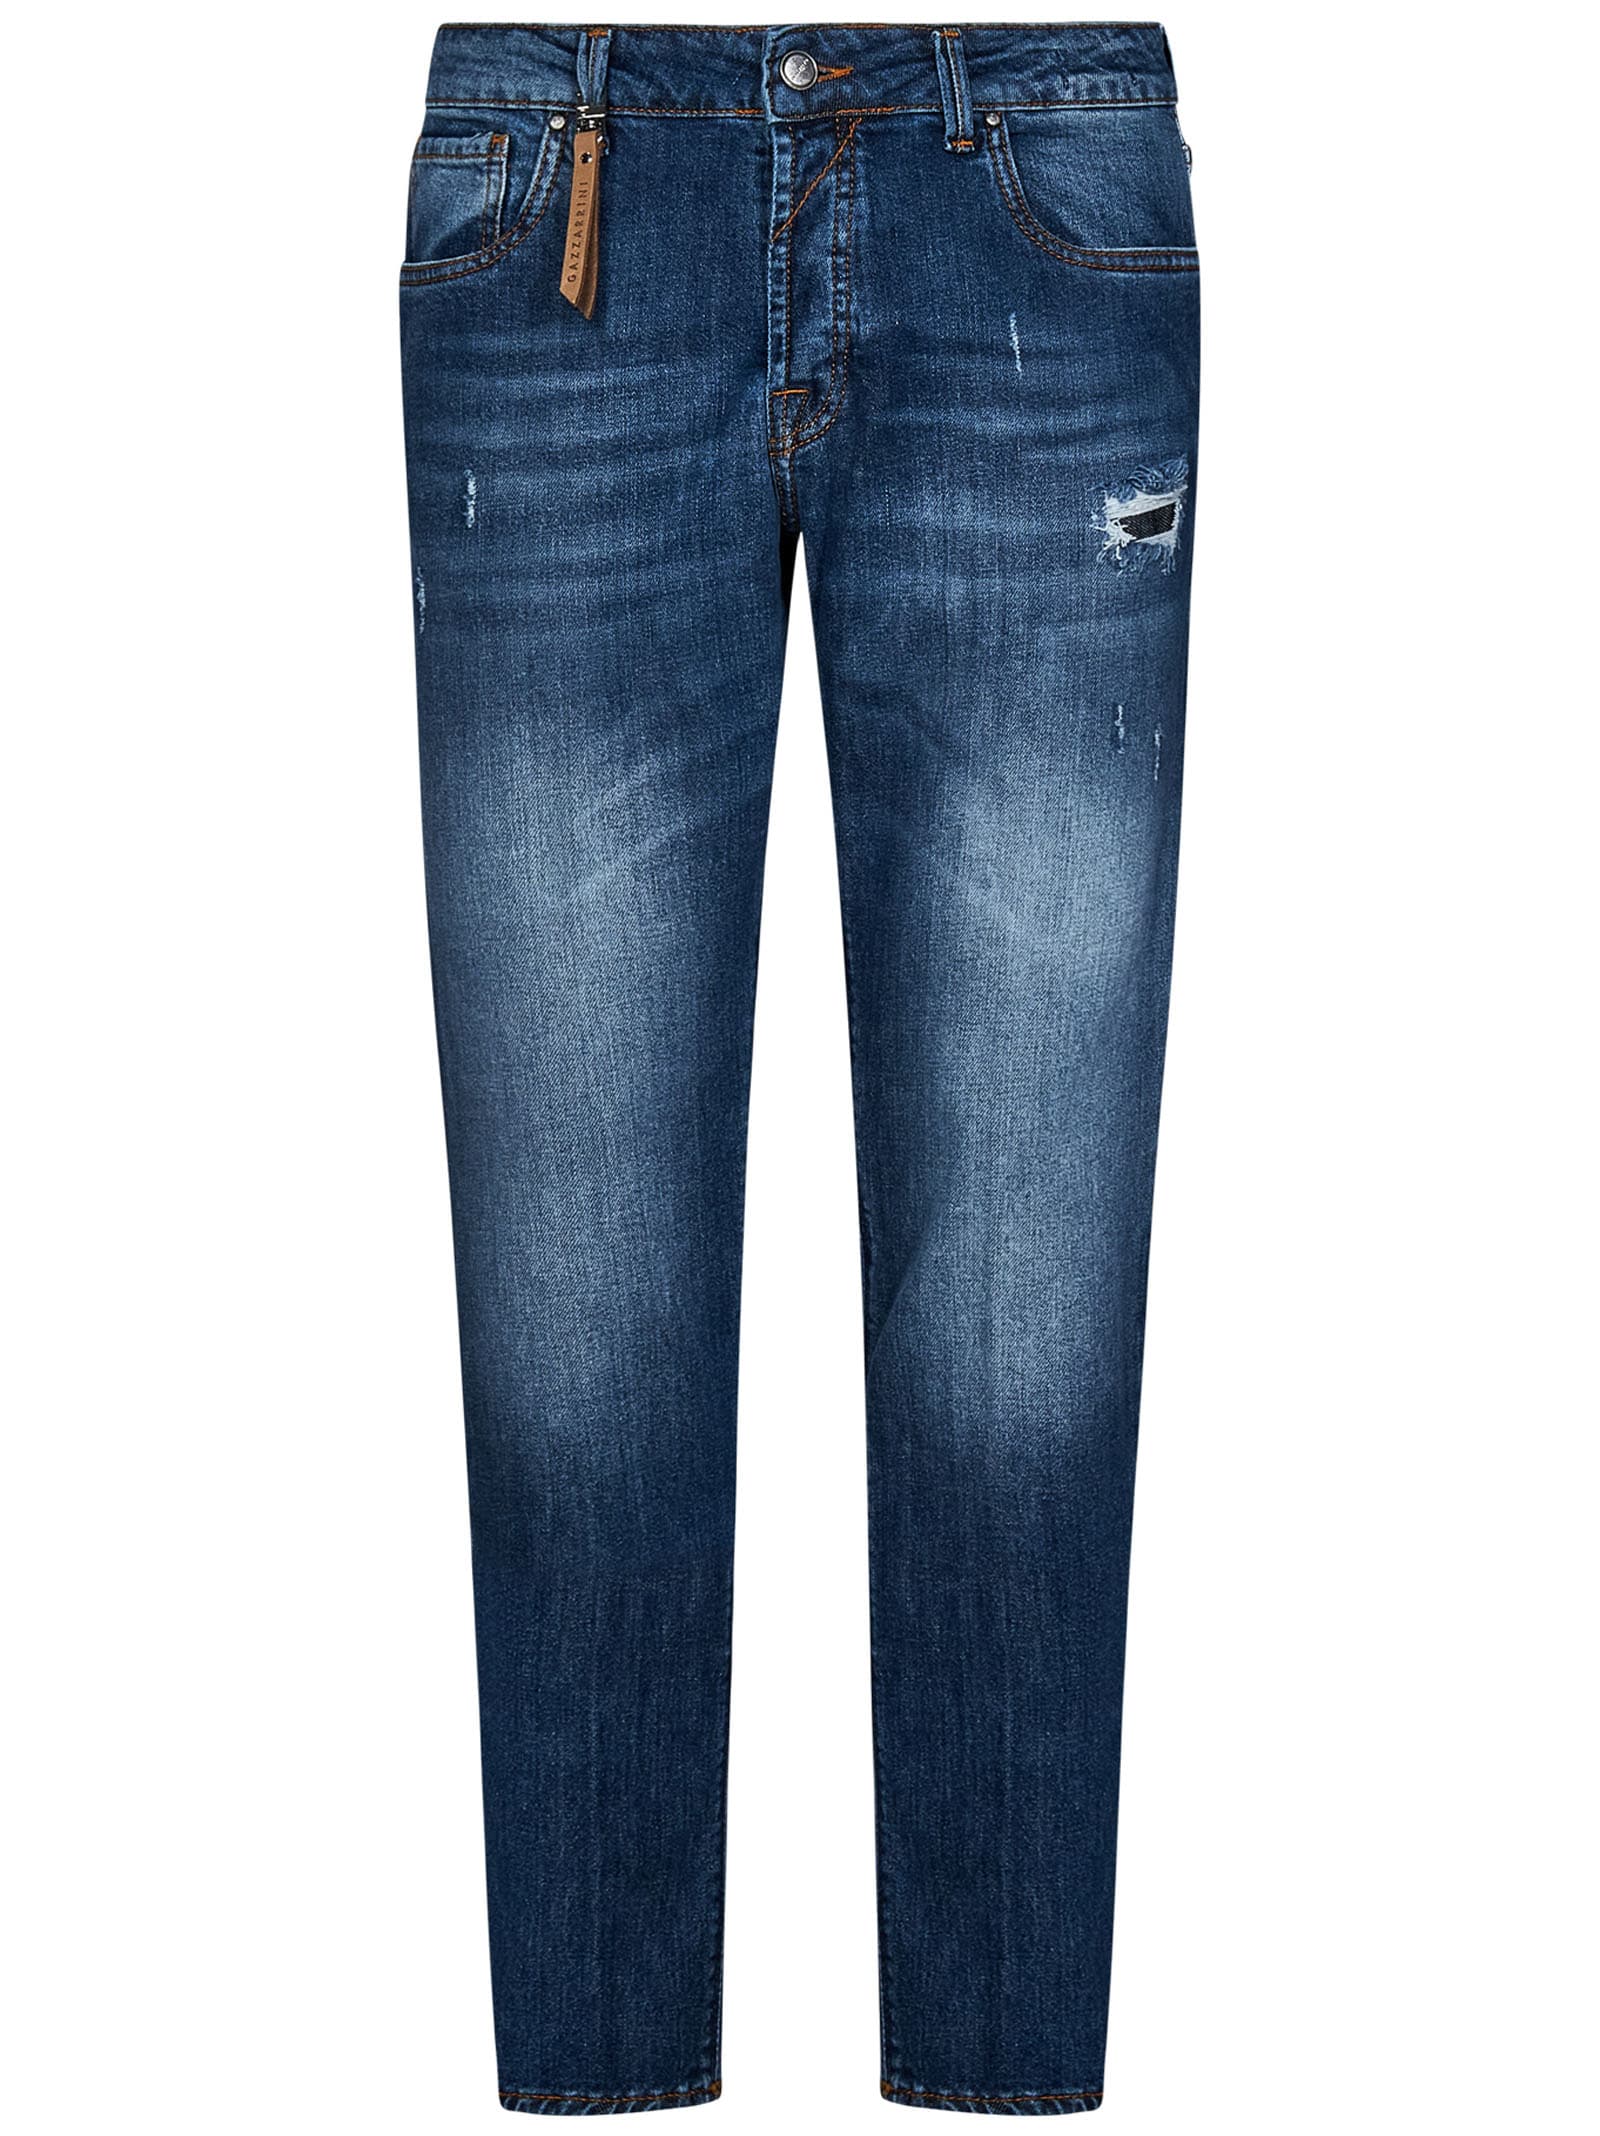 Gazzarrini Jeans